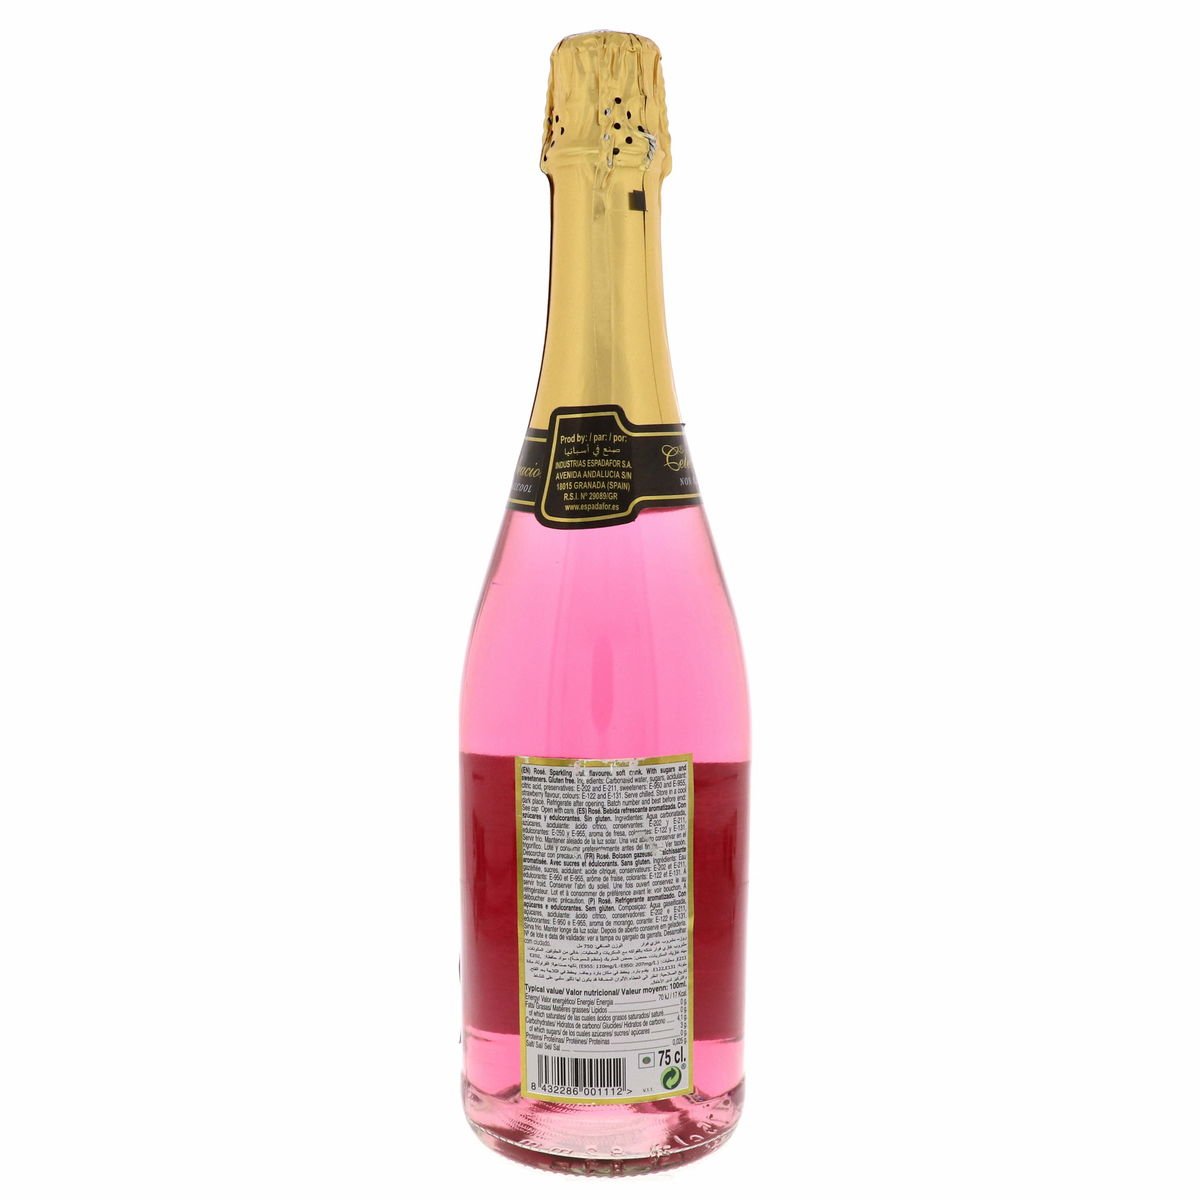 Le Celebracion Rose Flavoured Soft Drink 750 ml